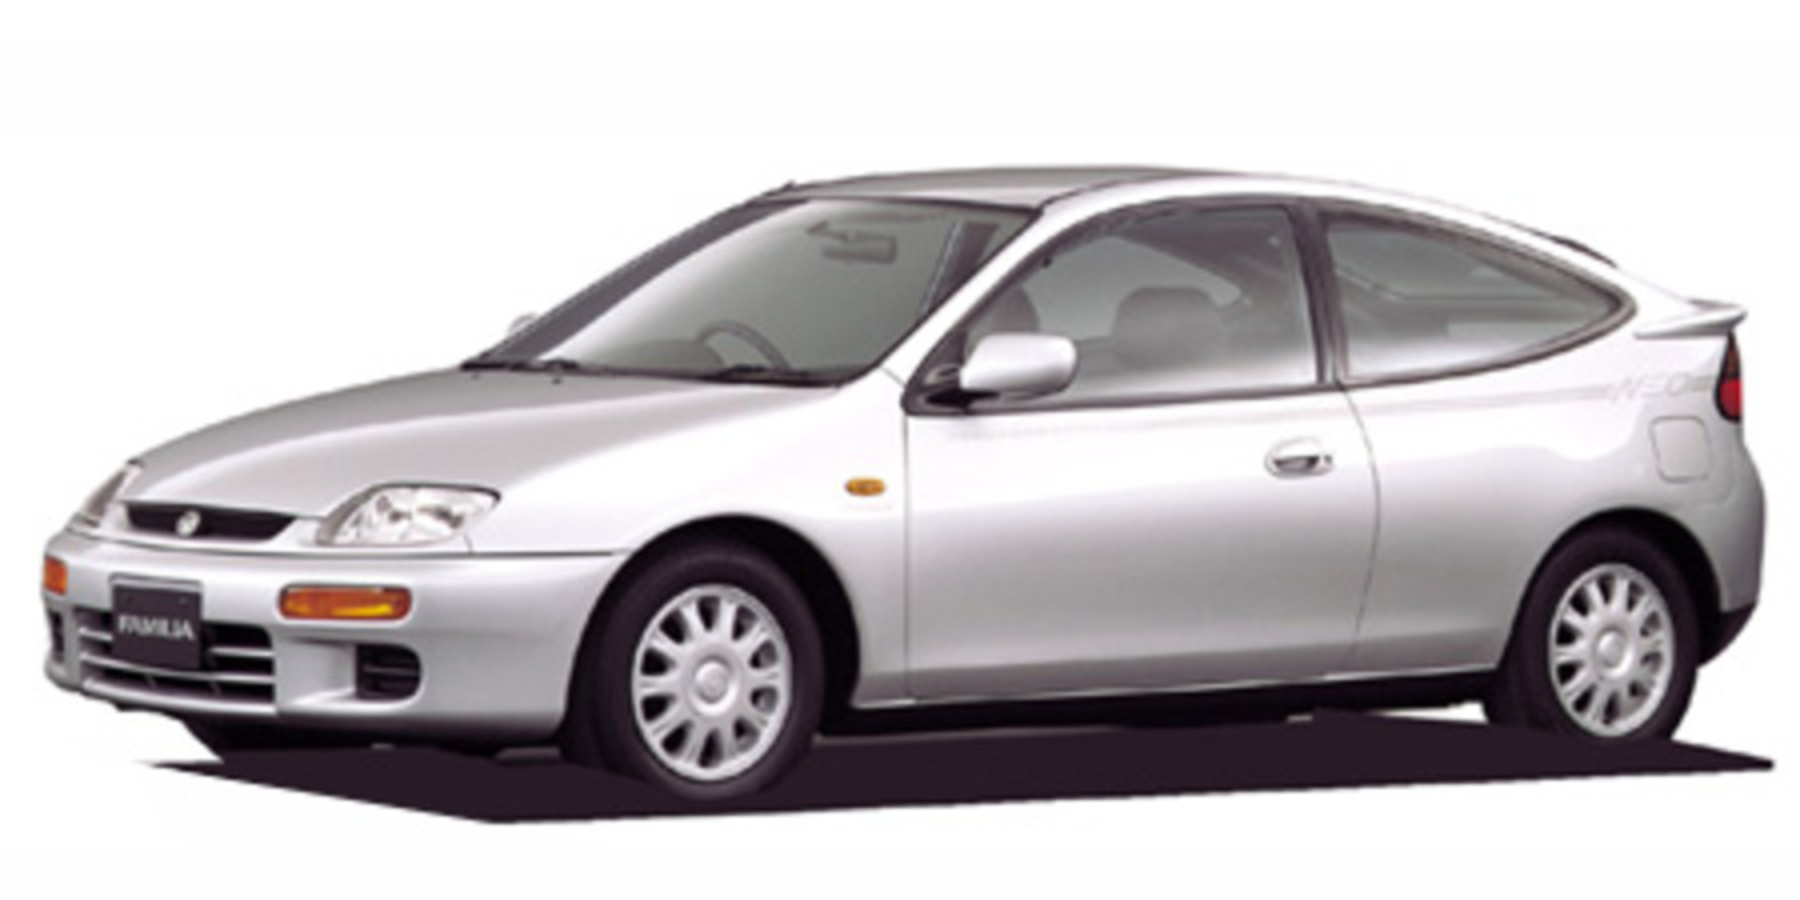 Mazda Familia Neo RS. View Download Wallpaper. 450x225. Comments